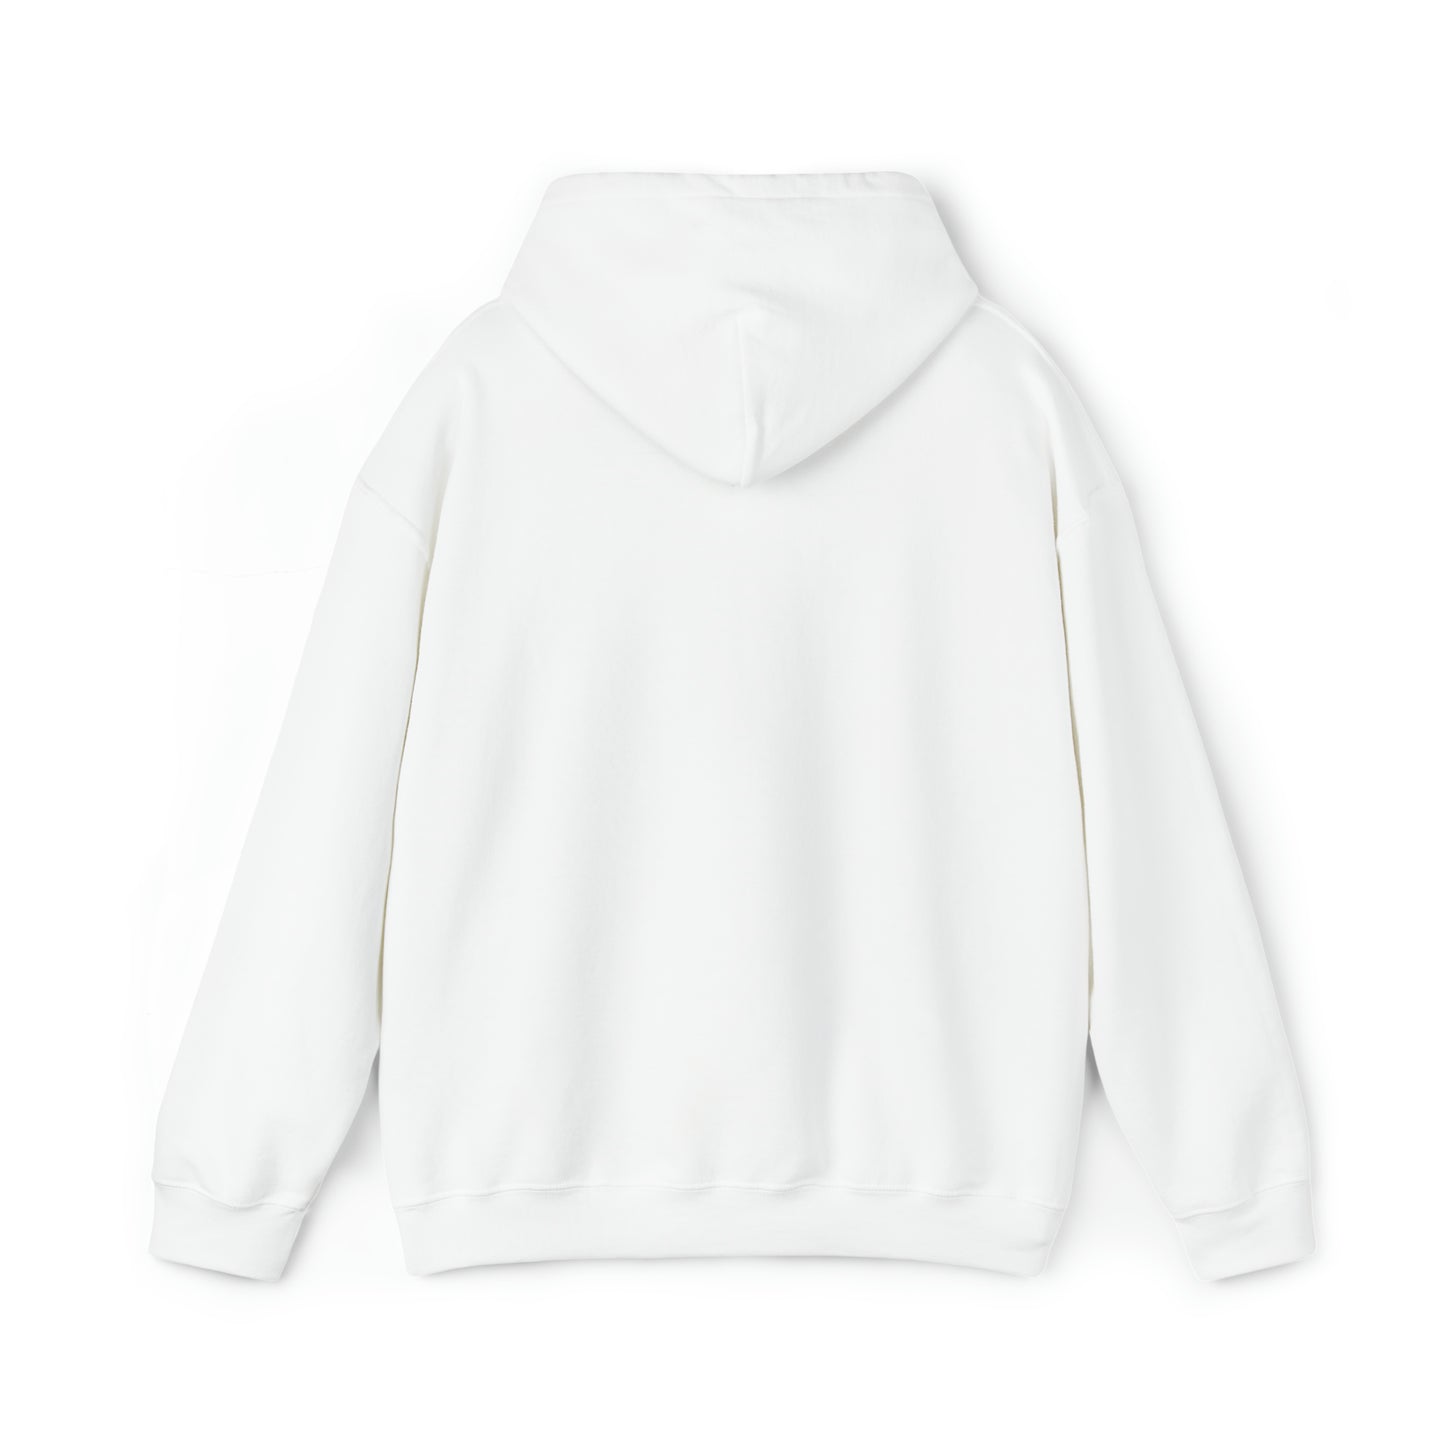 YOGA Unisex Heavy Blend™ Hooded Sweatshirt